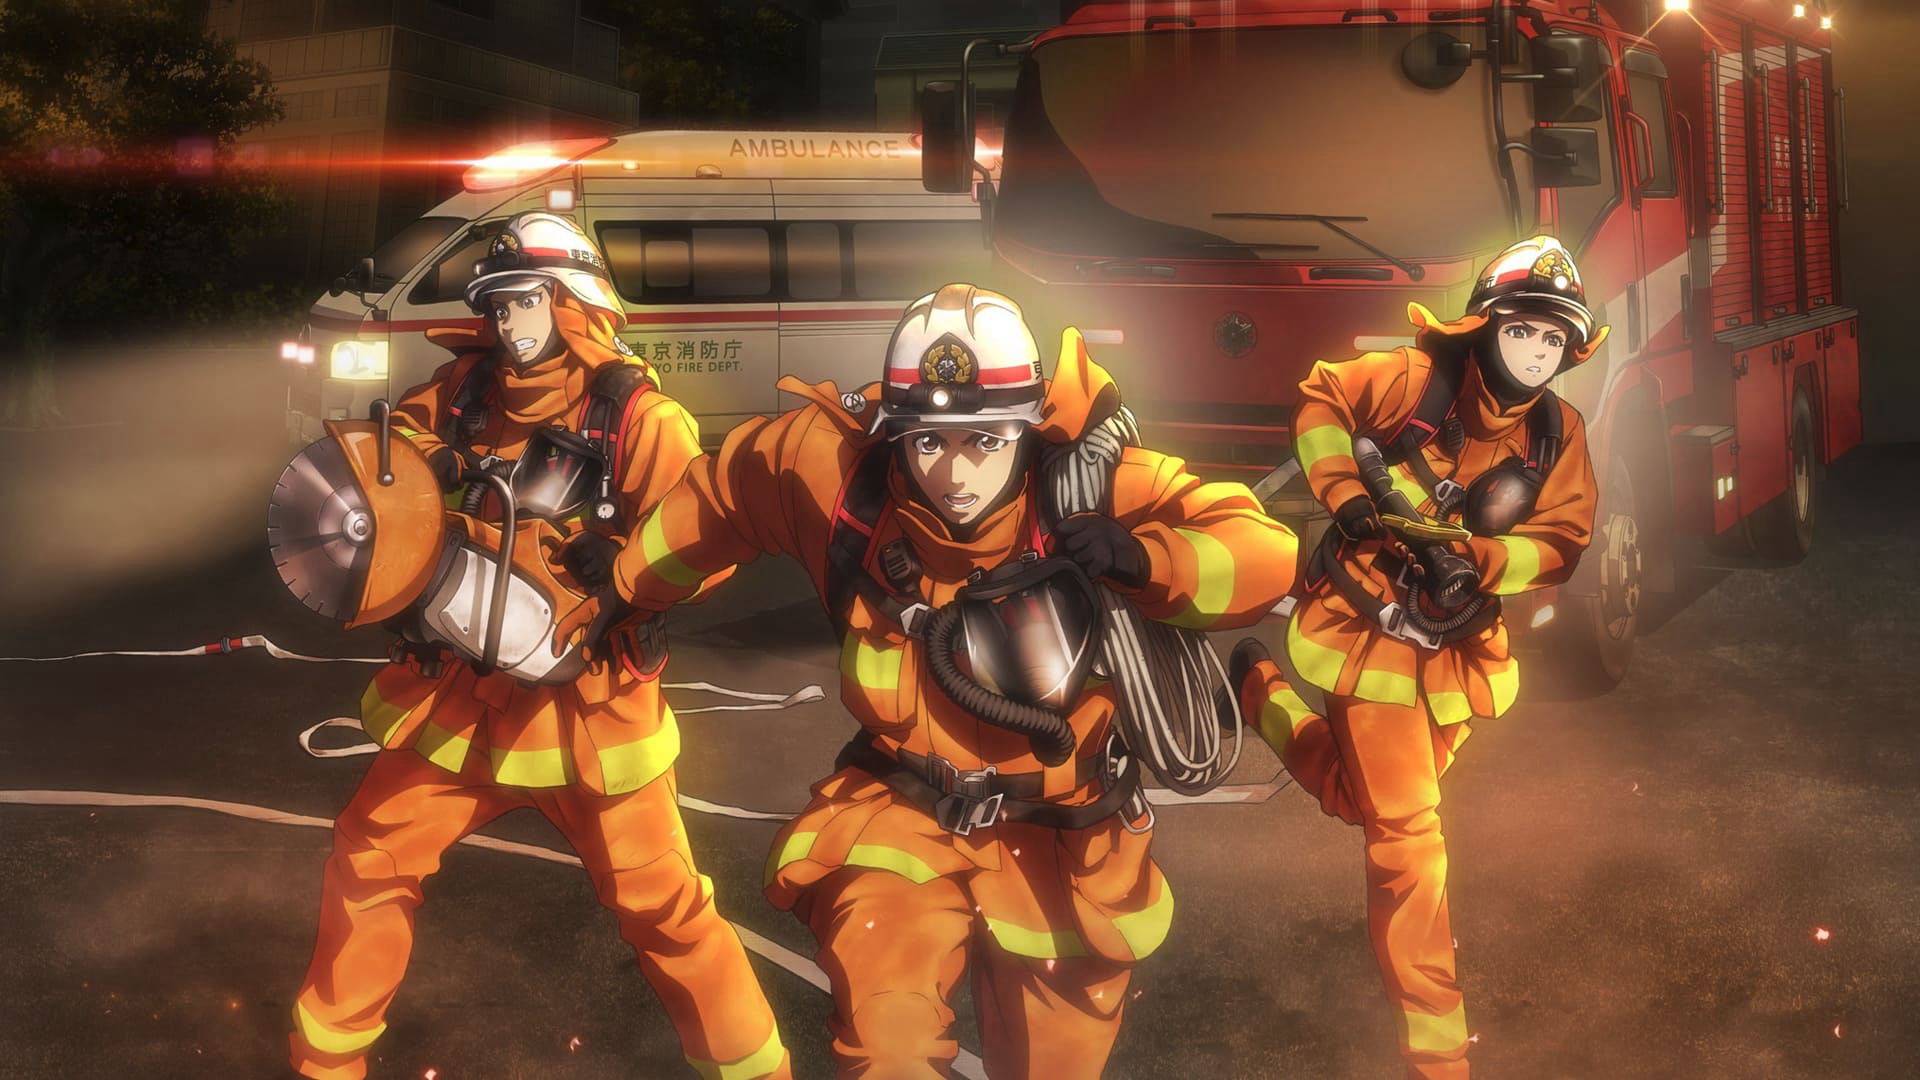 Banner Phim Lính Cứu Hỏa Daigo: Người Cứu Hộ Orange (Firefighter Daigo: Rescuer in Orange)